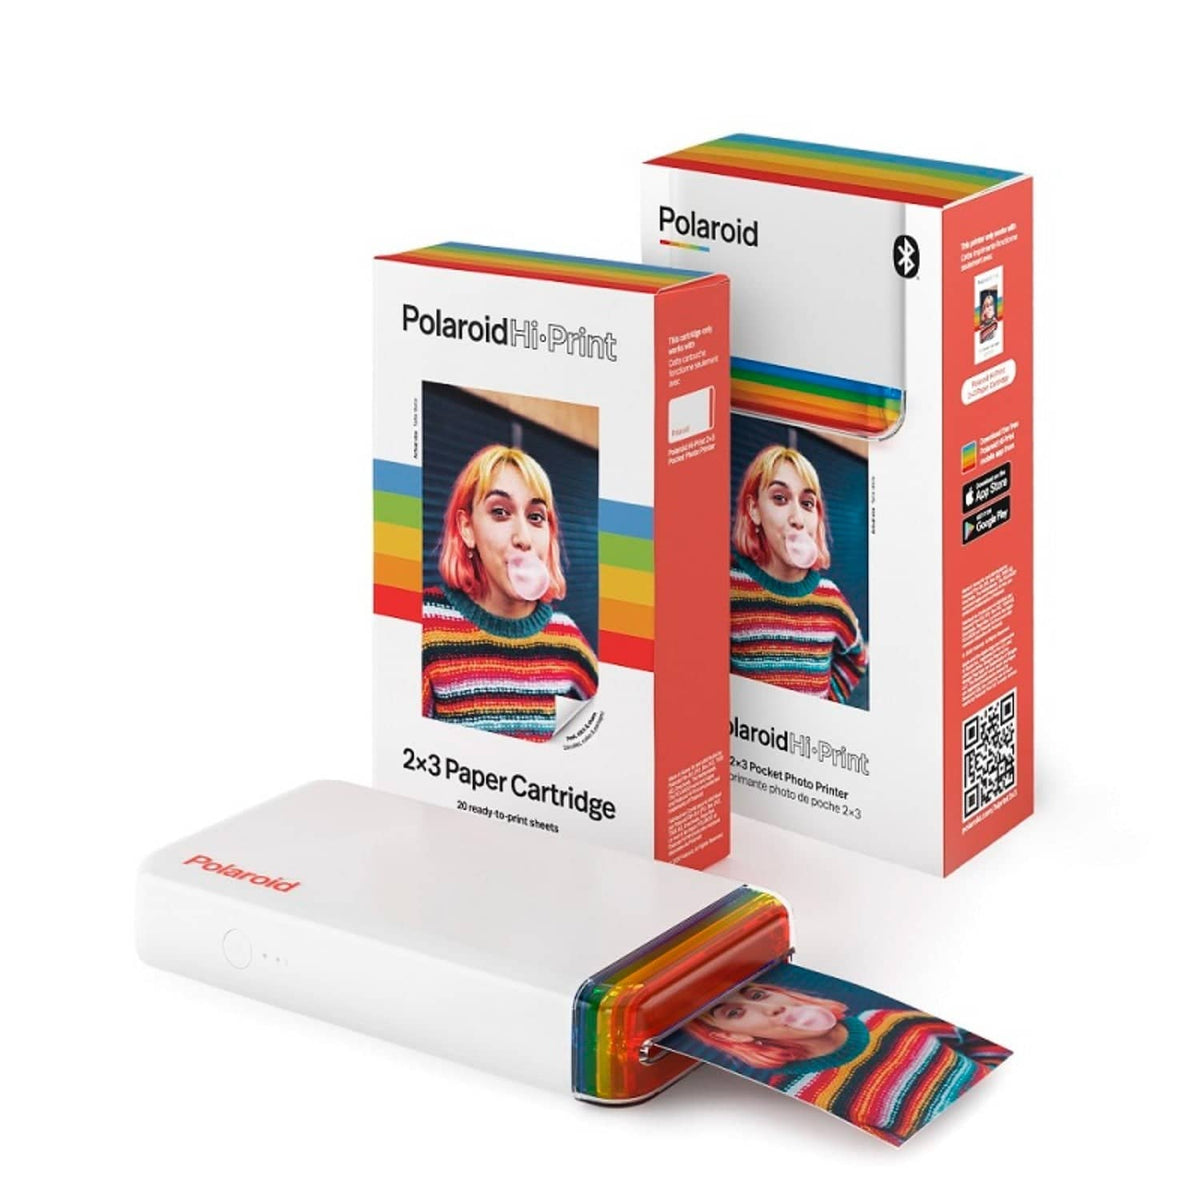 Polaroid Pocket Printer Bundle With 20pcs Films